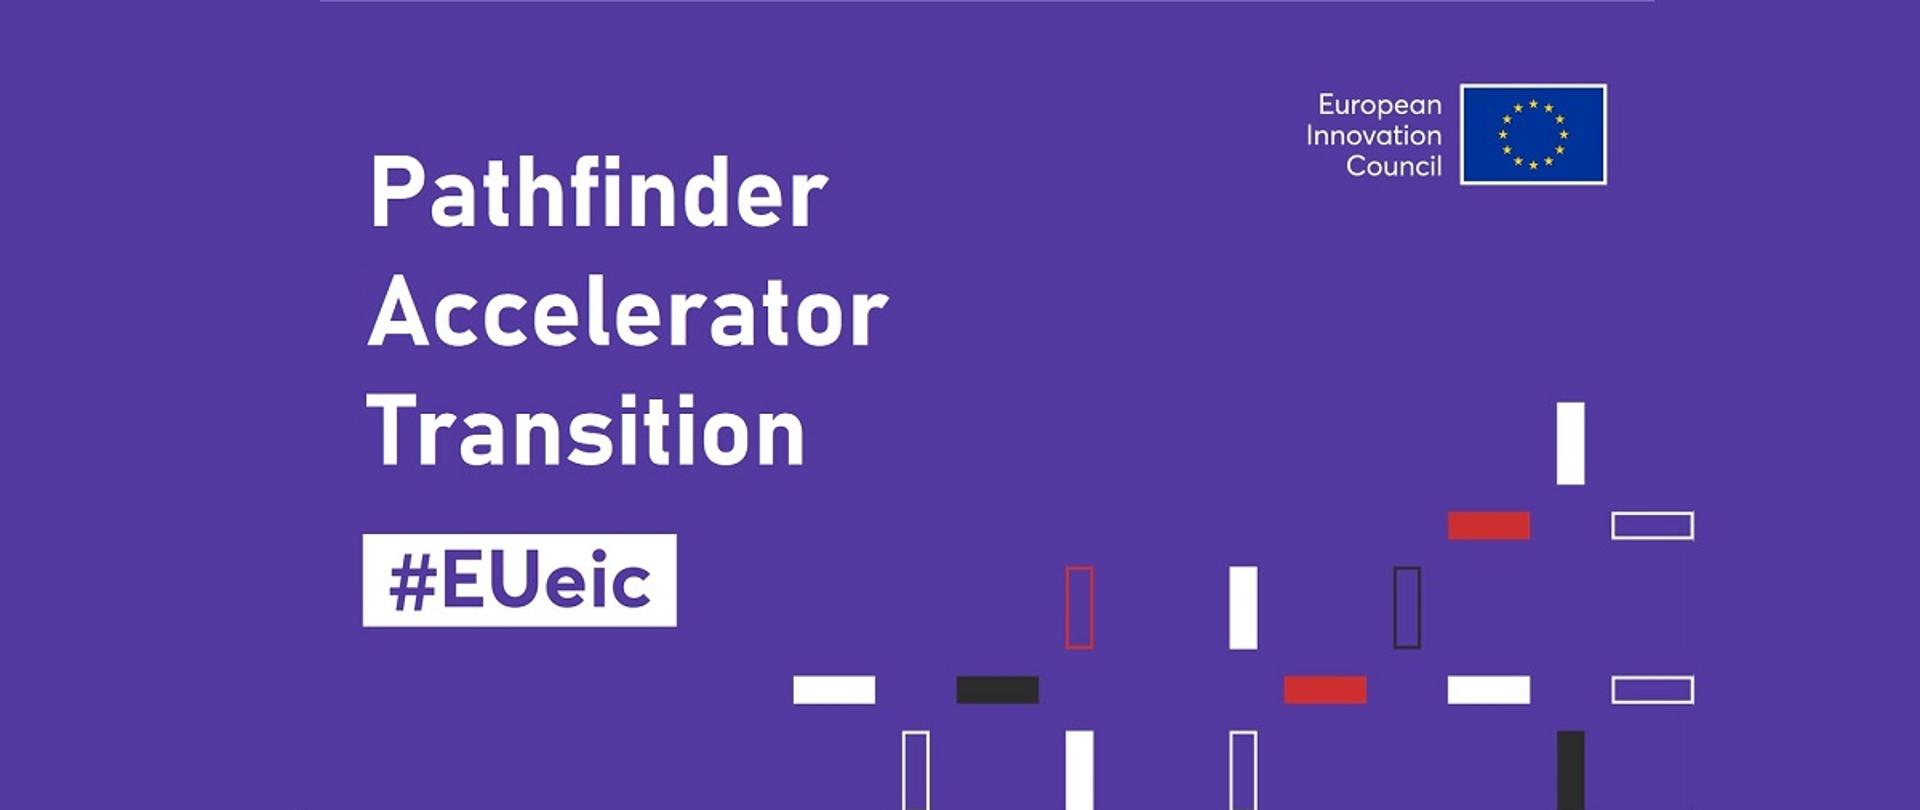 Na fioletowym tle flaga UE, pod spodem napis PathFinder Accelerator Transition #EUeic